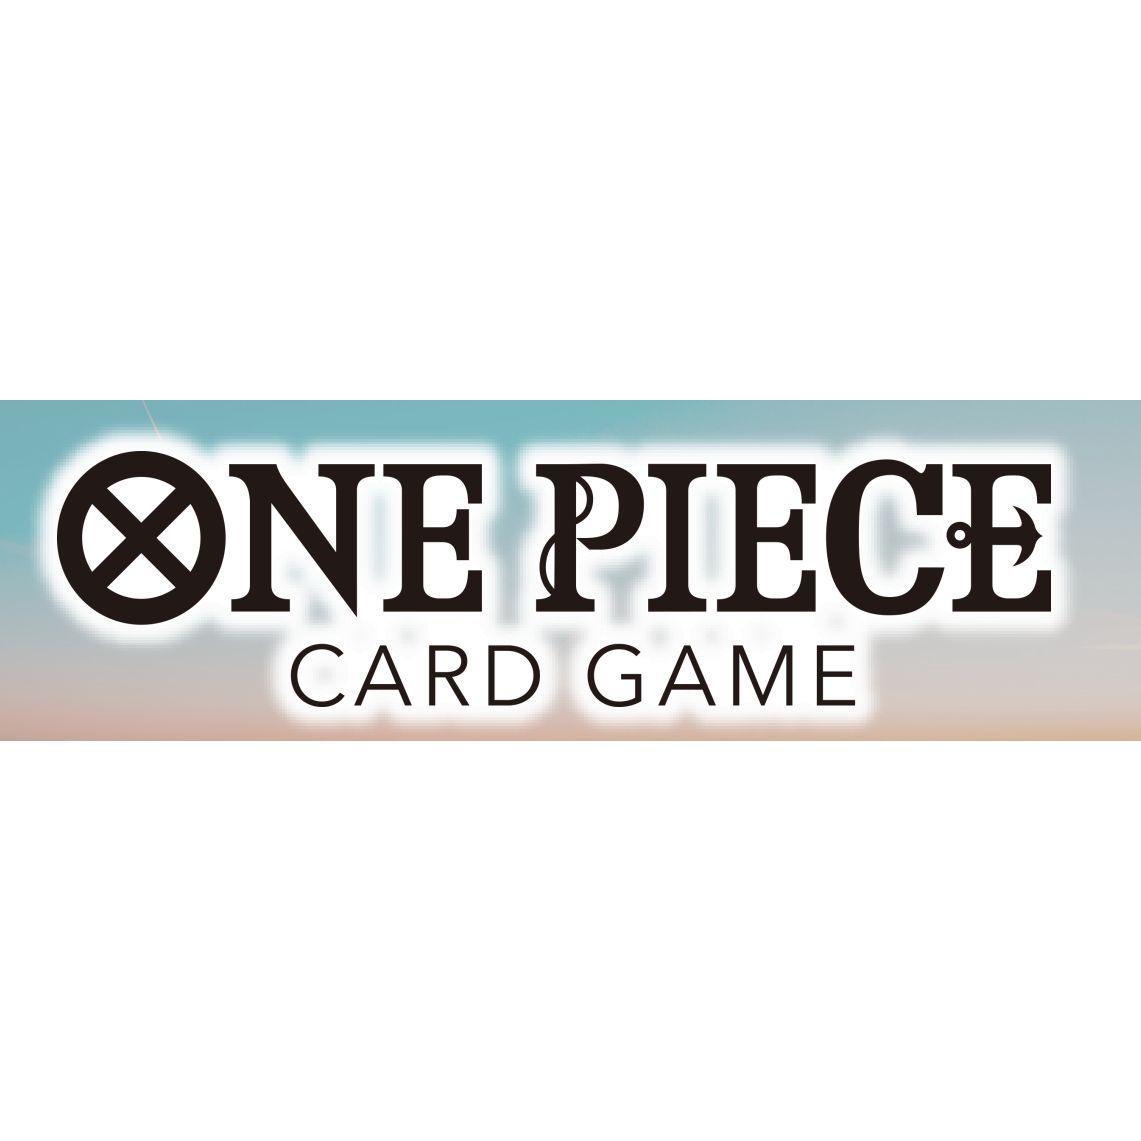 One Piece Card Game - Awakening of the New Era OP-05 Booster Box - English